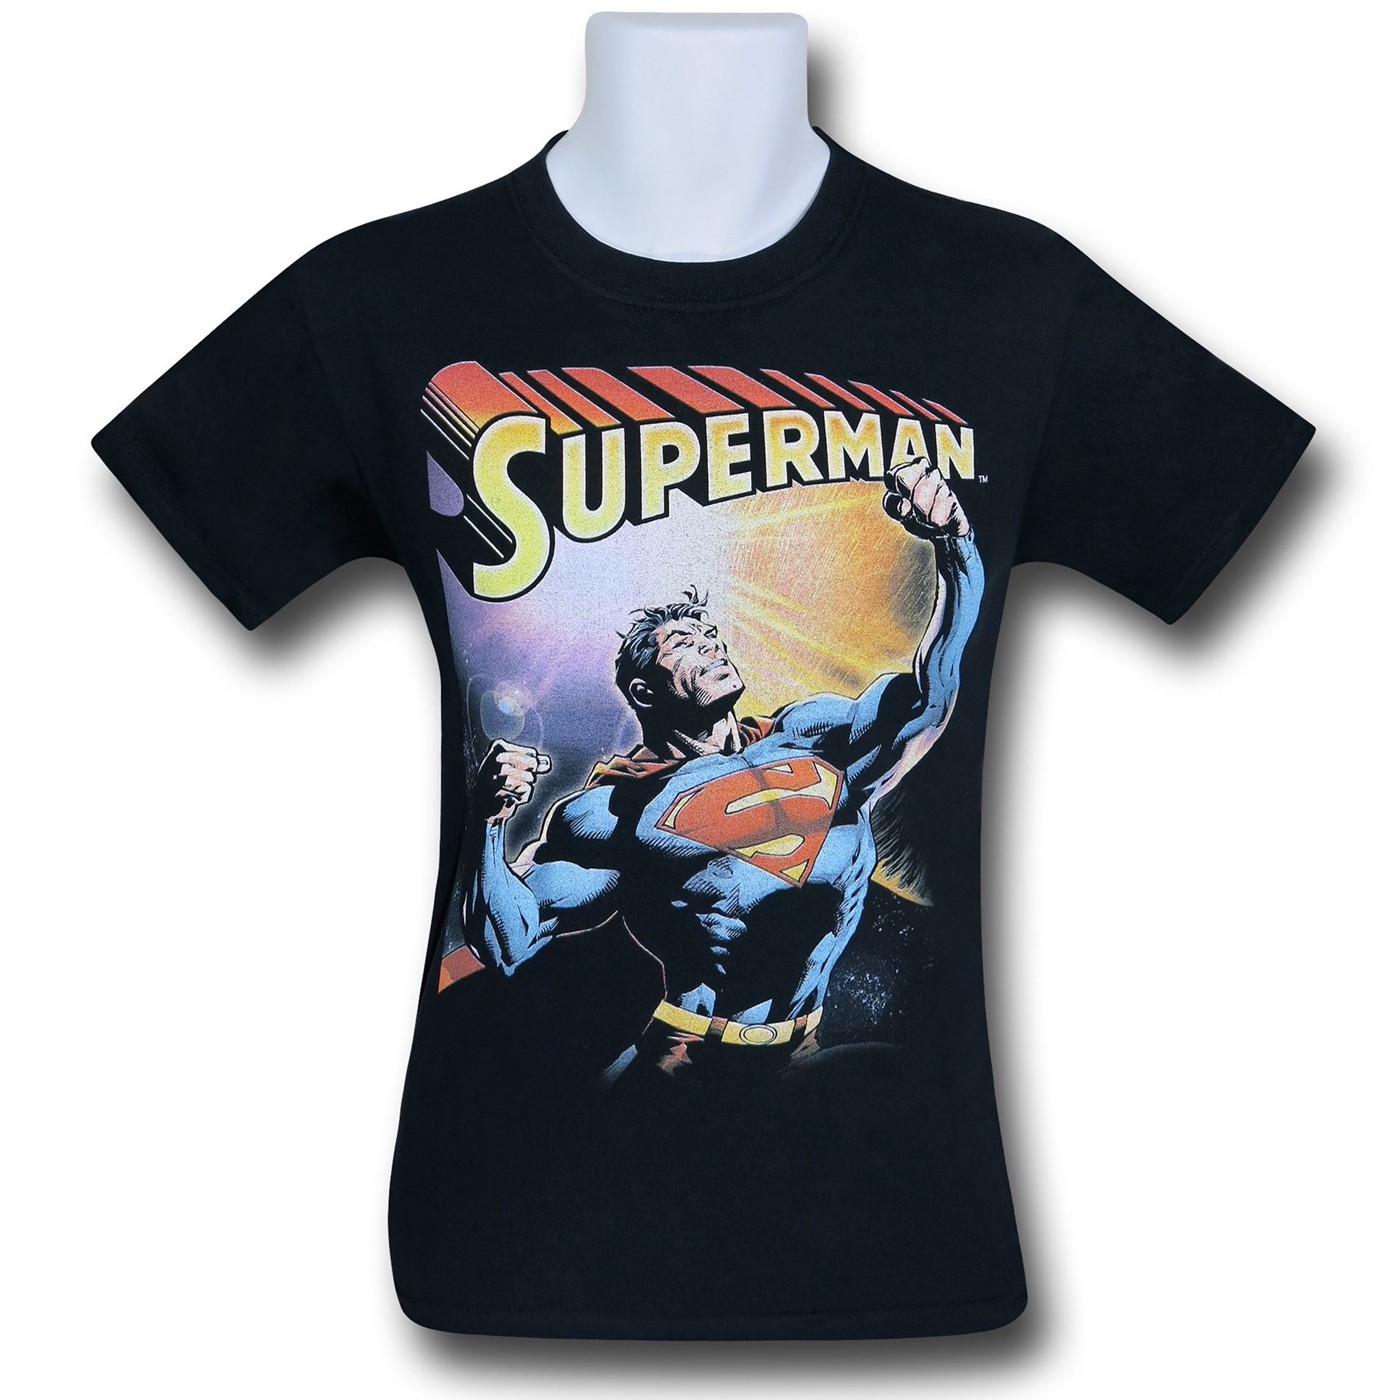 Superman Pose Under Logo on Black T-Shirt